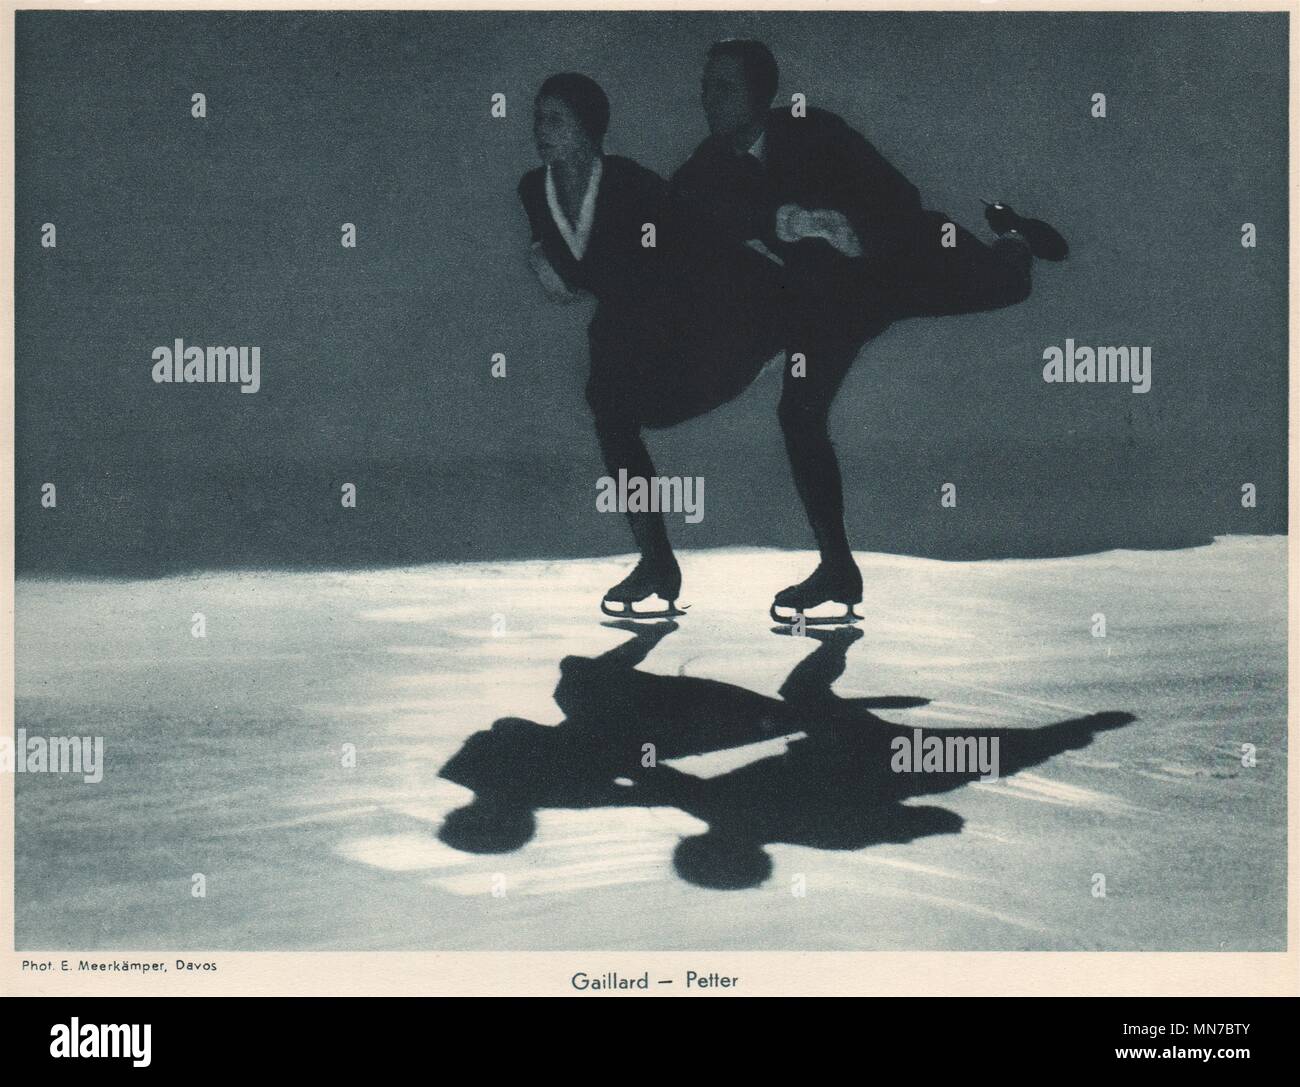 ICE FIGURE SKATING. Gaillard - Petter, Davos (1) 1935 old vintage print Stock Photo